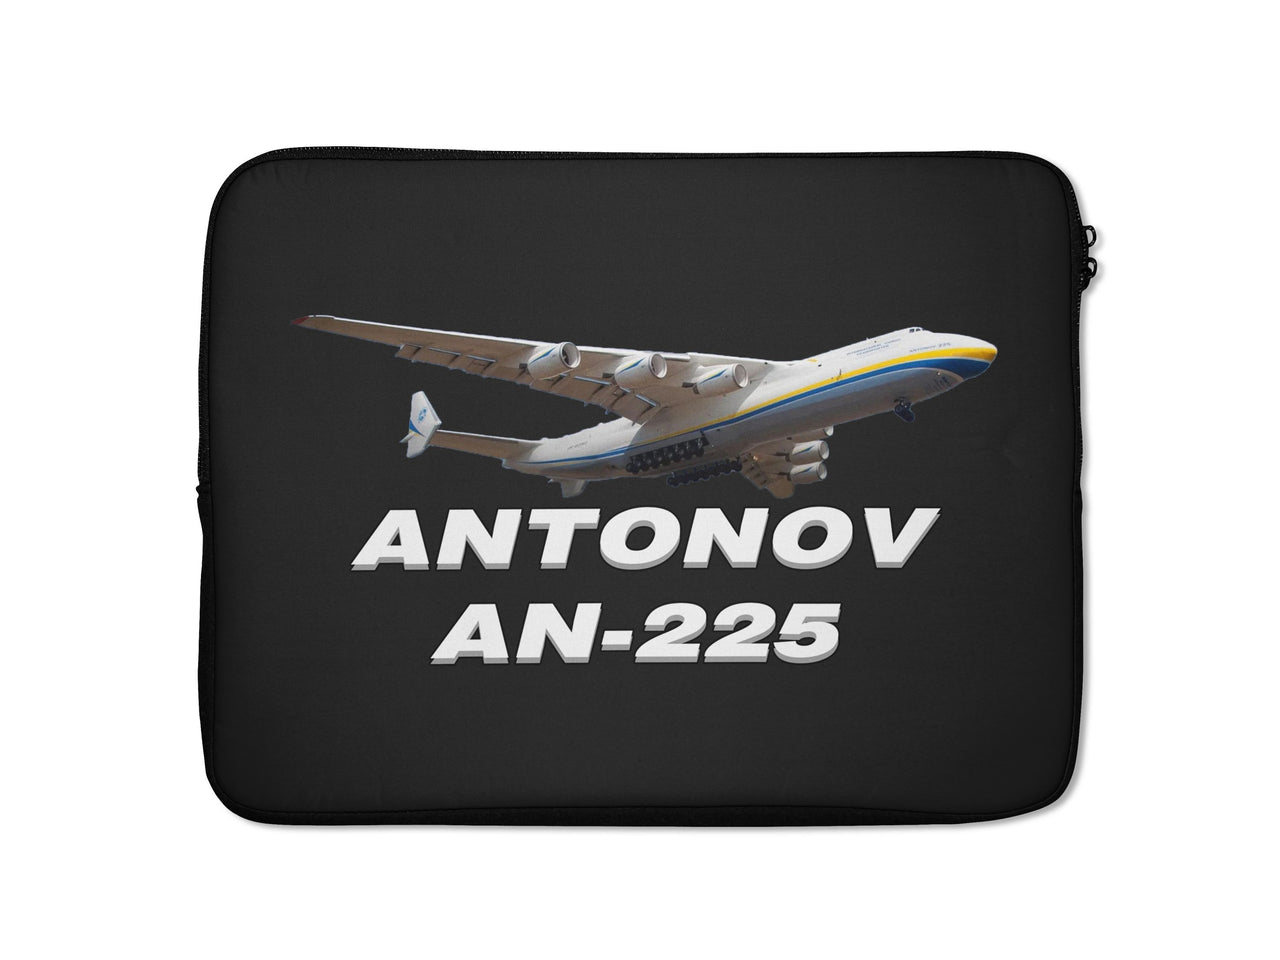 Antonov AN-225 (15) Designed Laptop & Tablet Cases